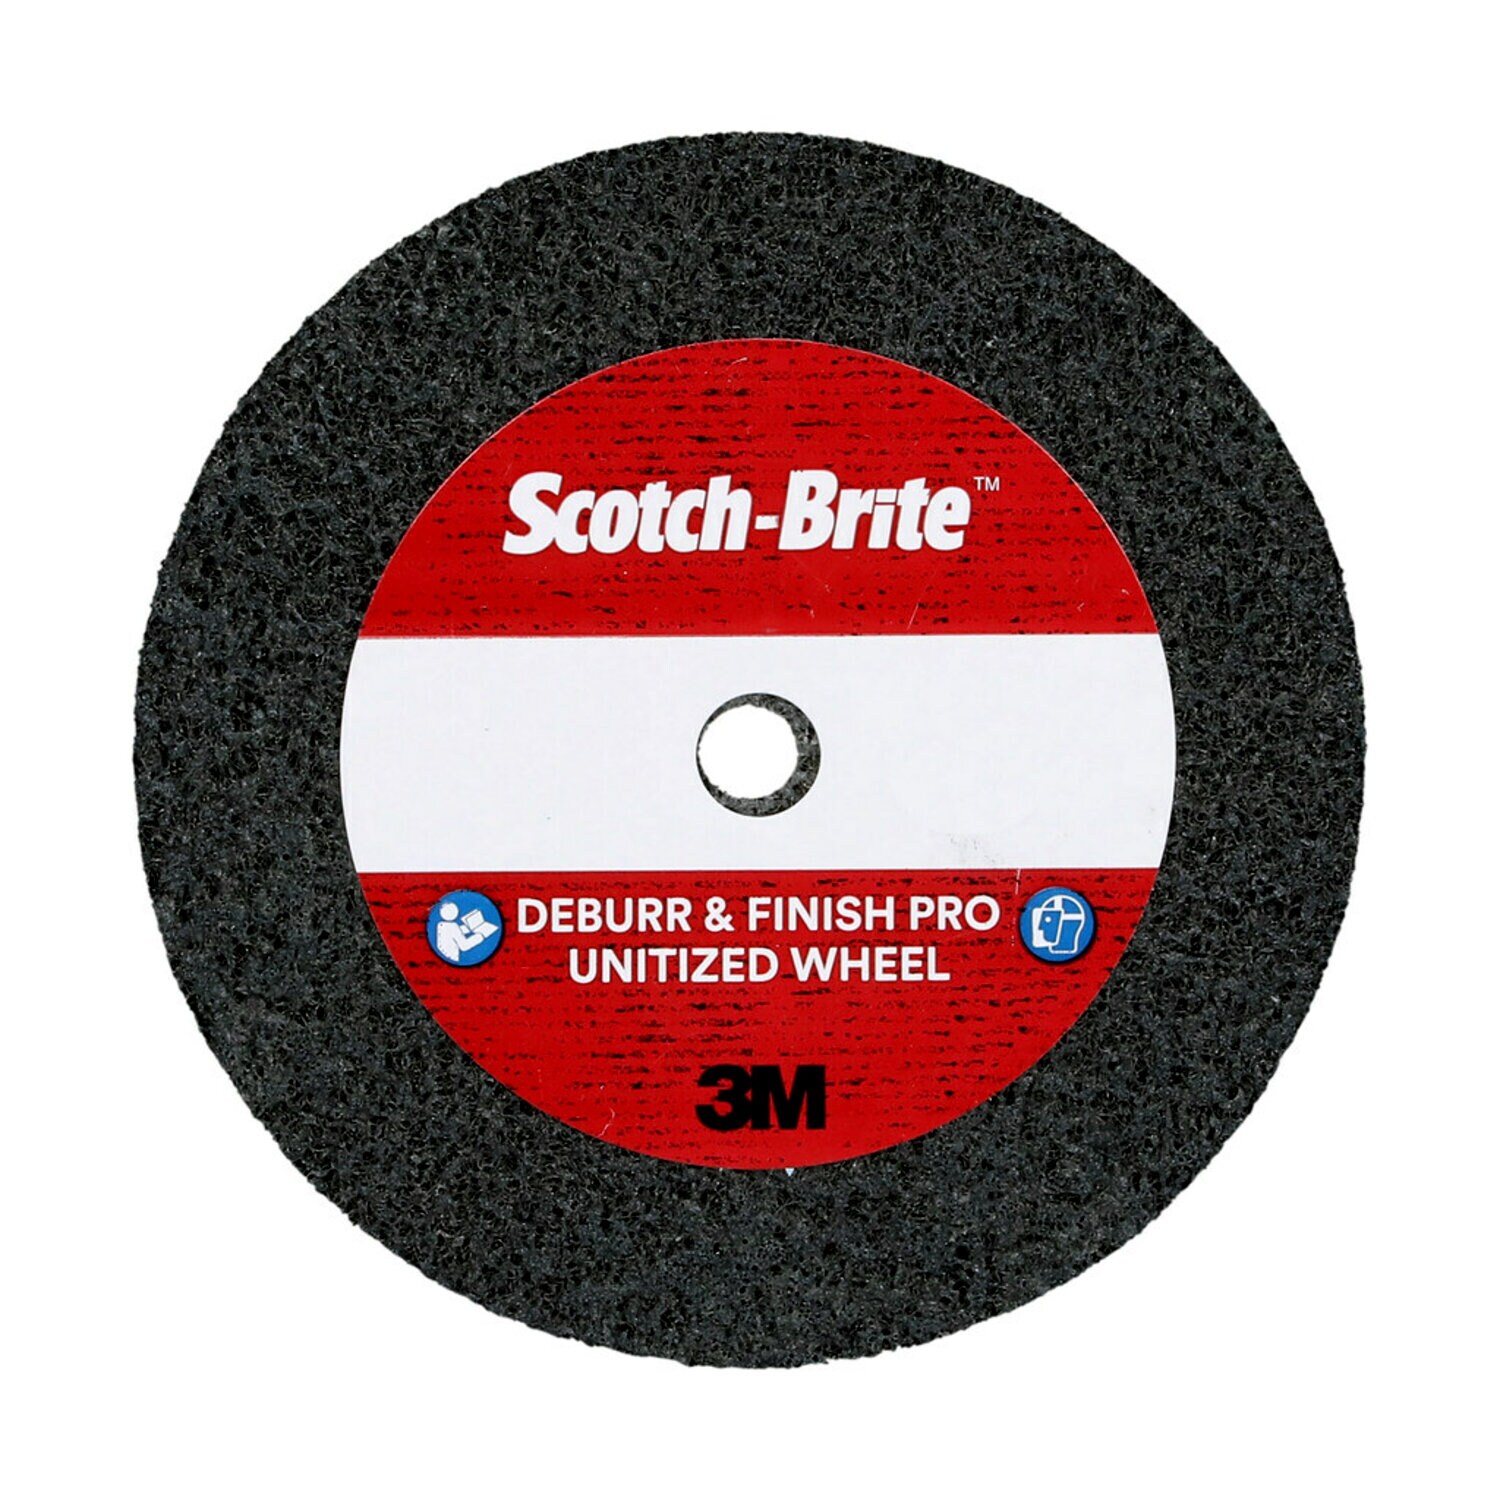 7100143462 - Scotch-Brite Deburr & Finish Pro Unitized Wheel, DP-UW, 2S Fine, 2 in x
3/4 in x 1/4 in, 20 ea/Case